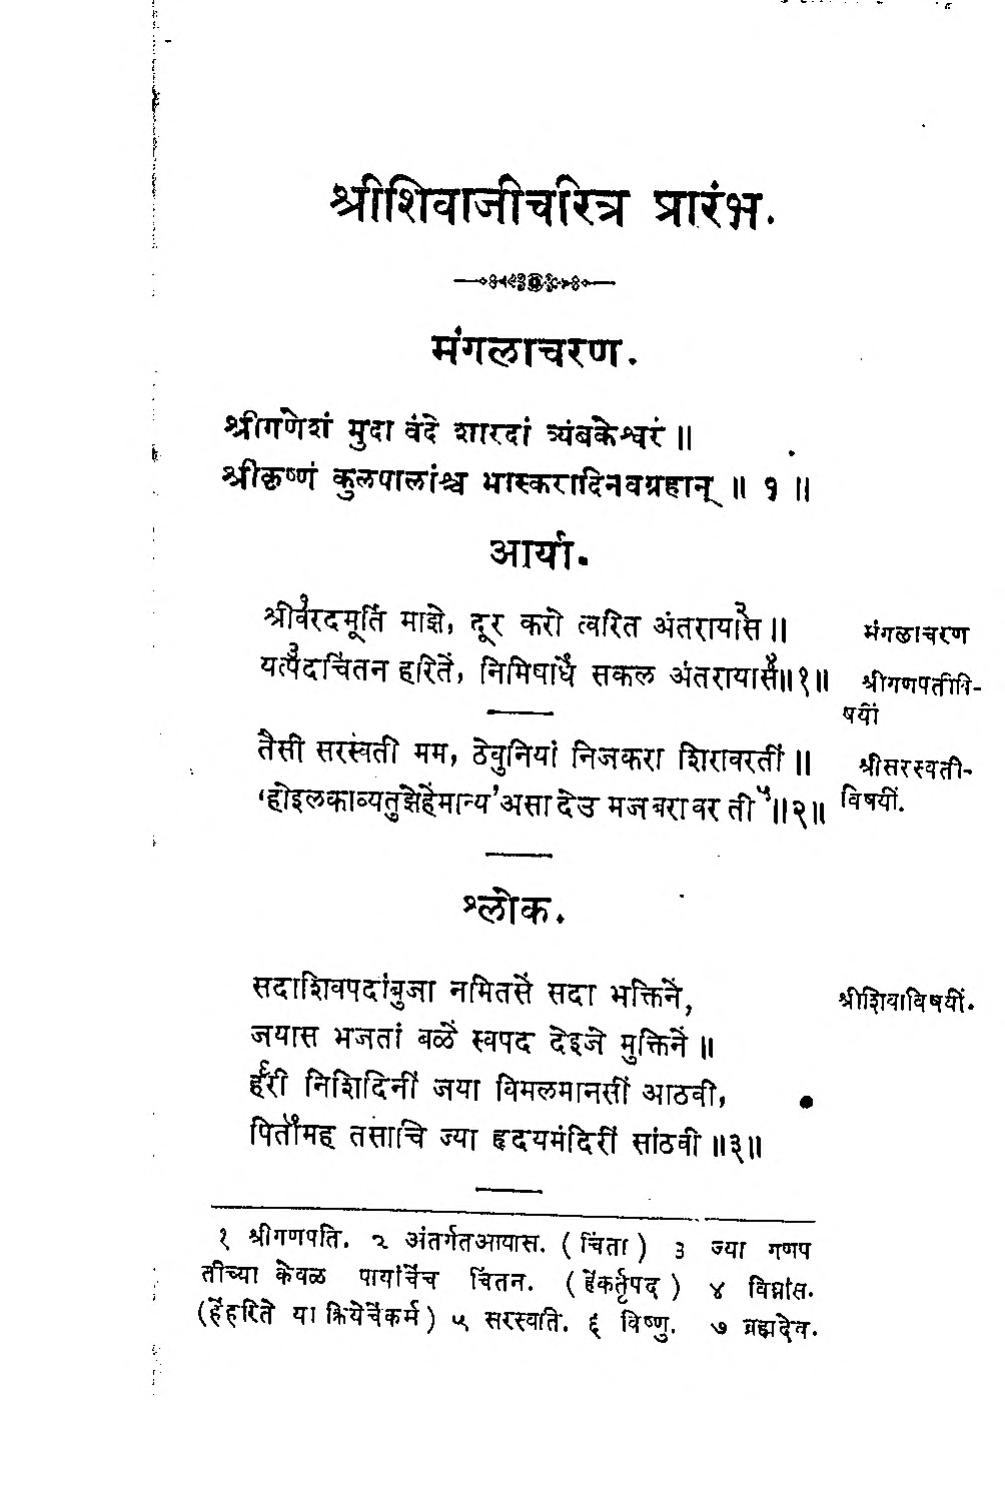 shivaji-charitra-by-ganesh-shastri-lele-1